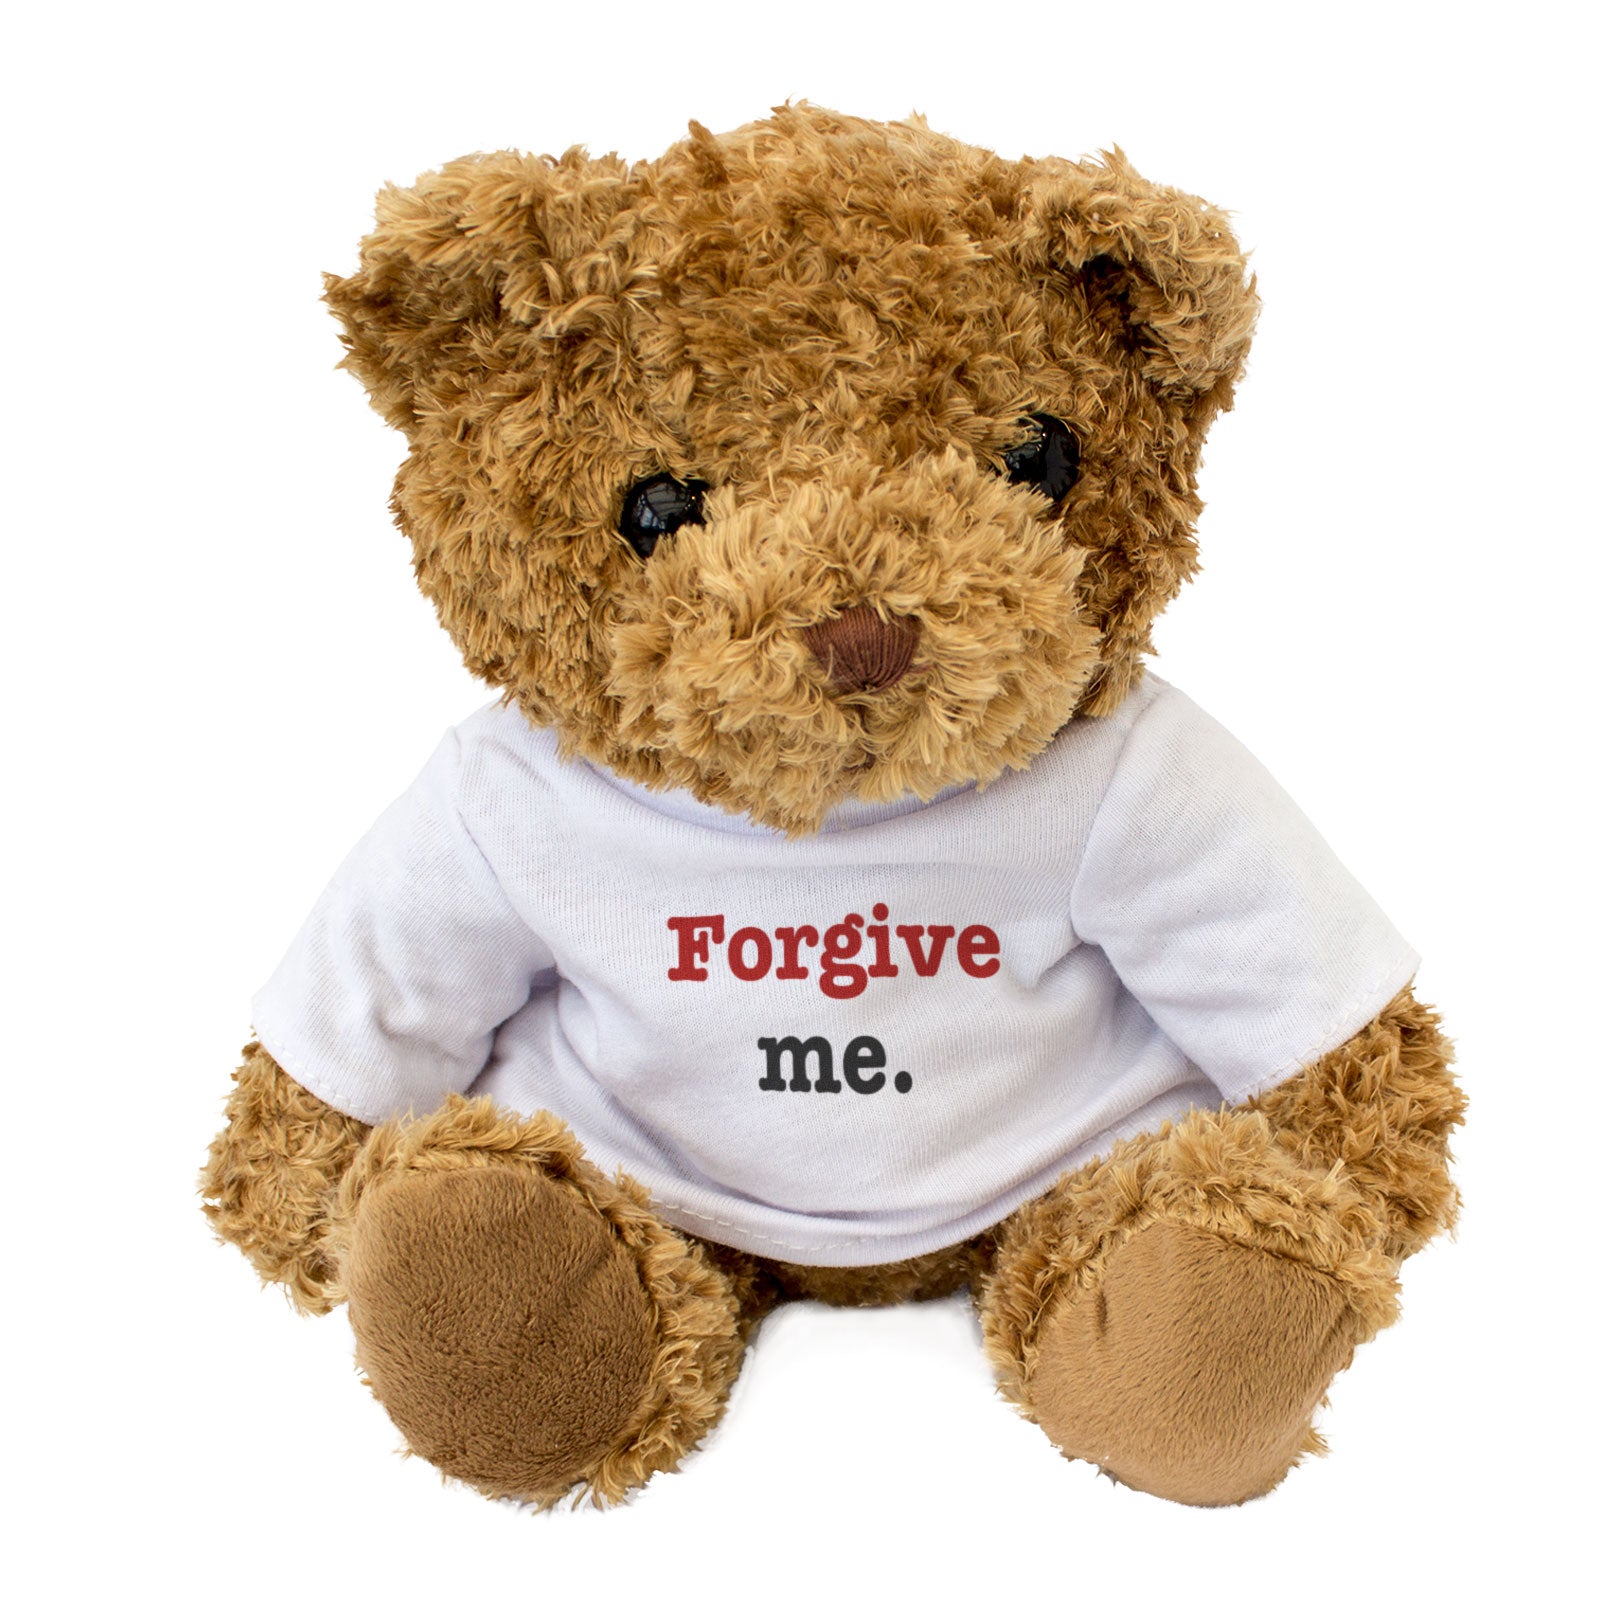 Forgive Me Teddy Bear Apology Gift